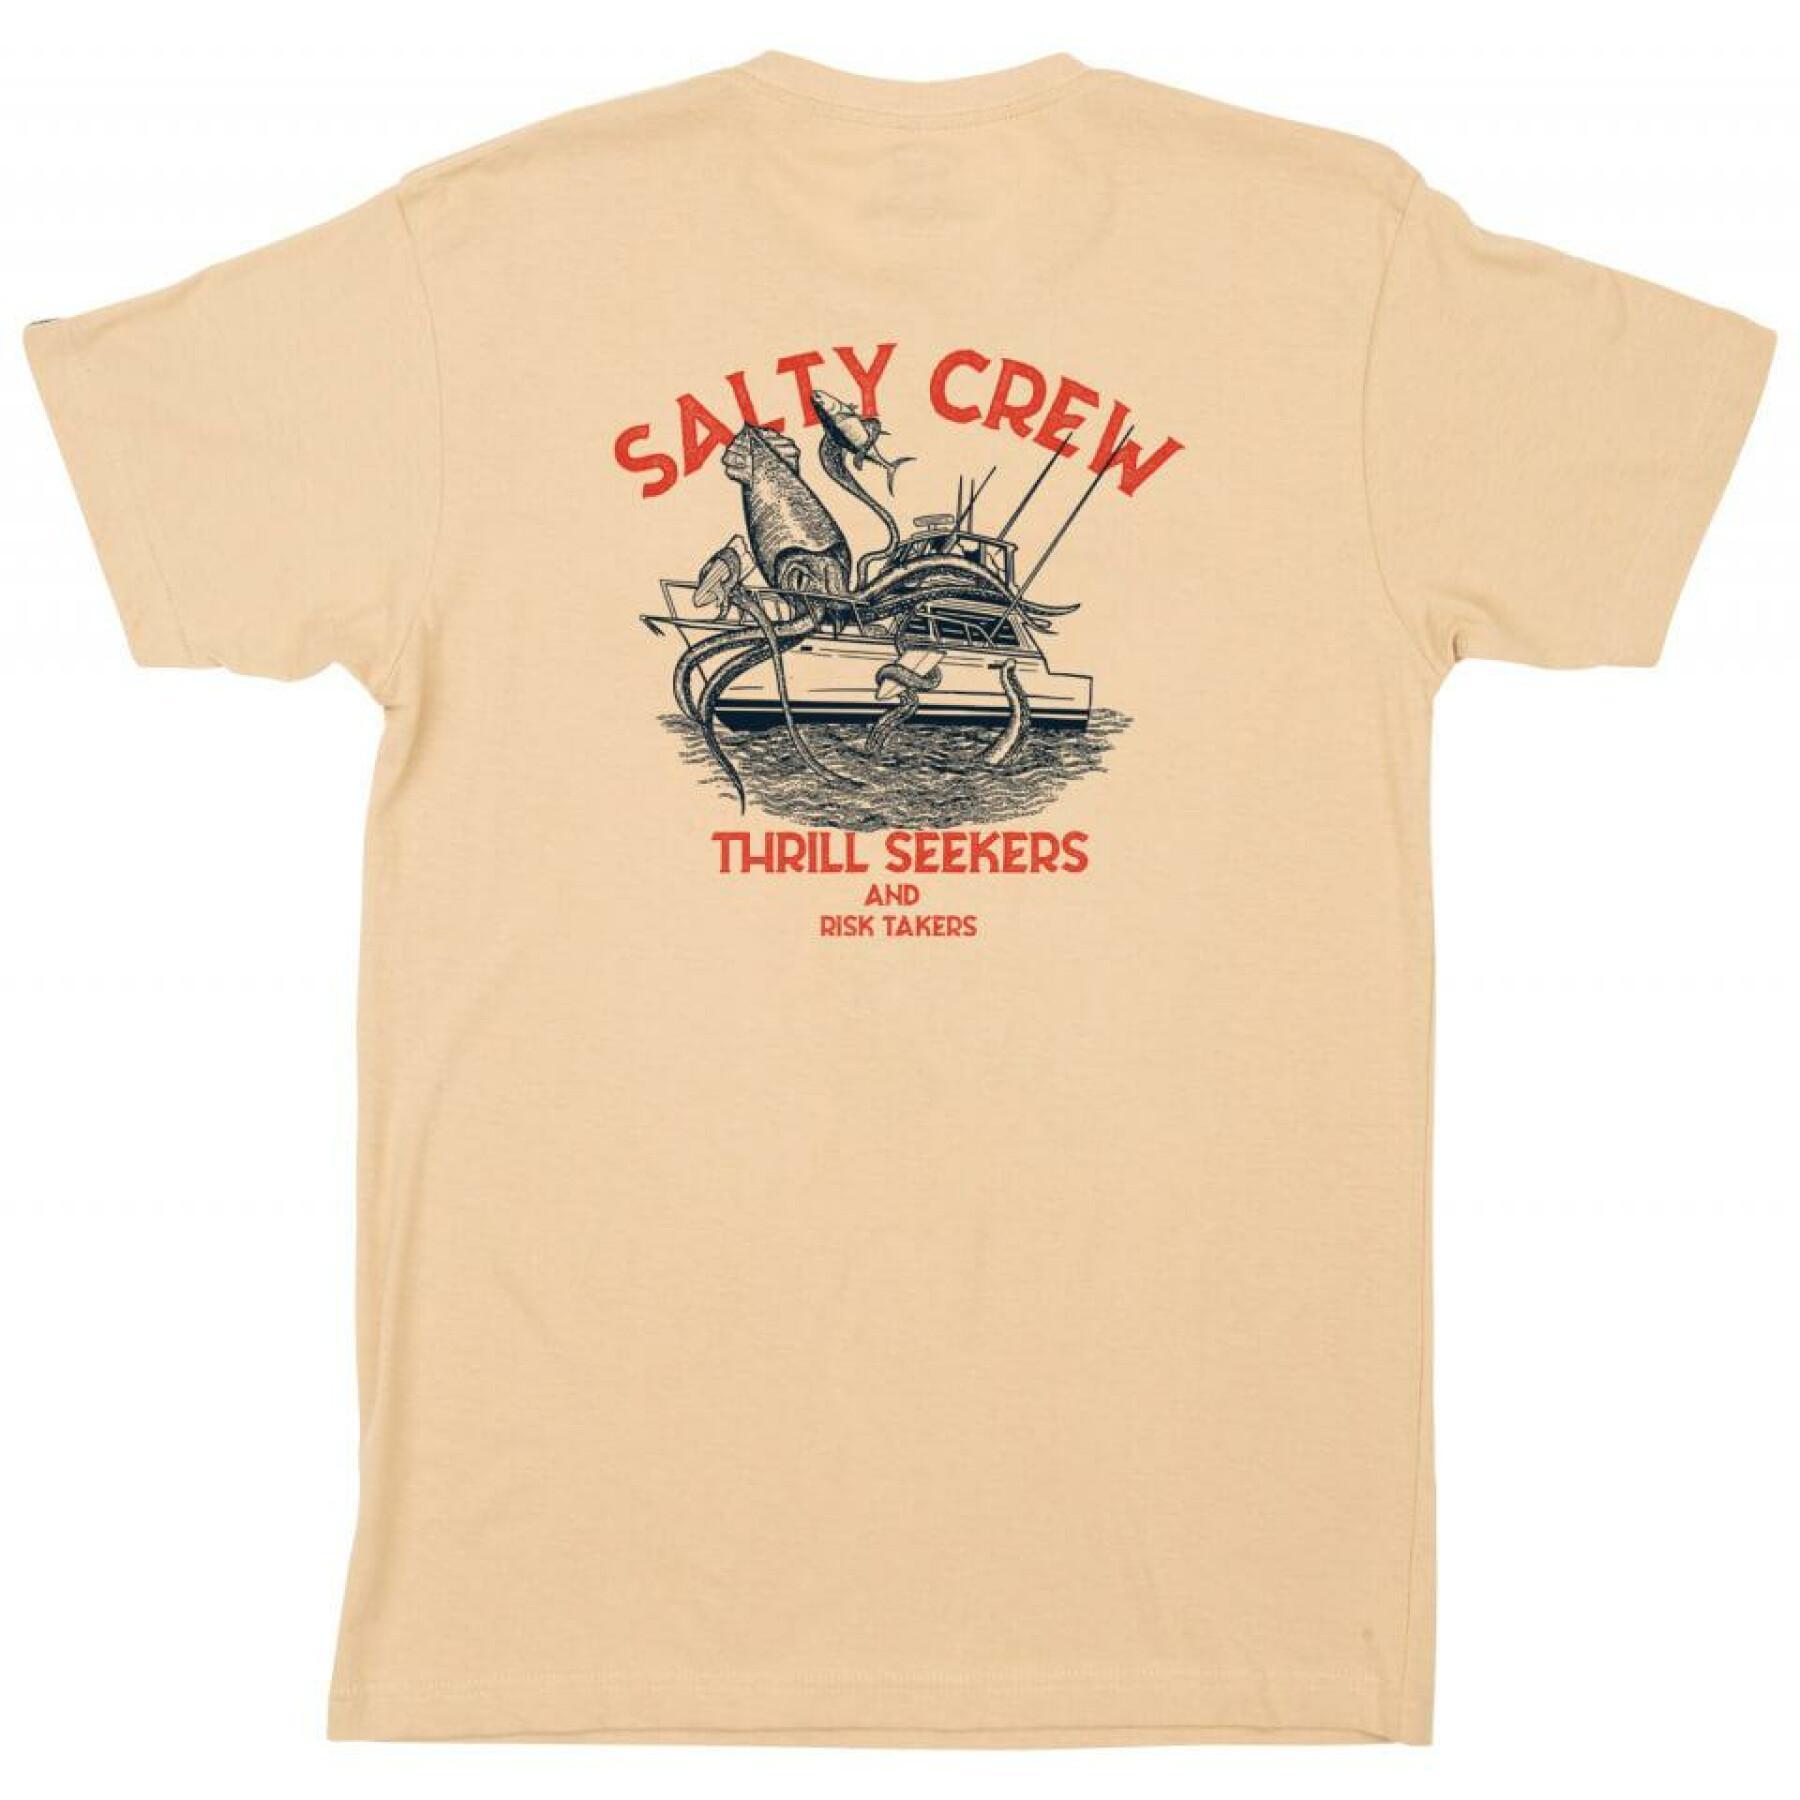 T-shirt Salty Crew Deepwater Premium